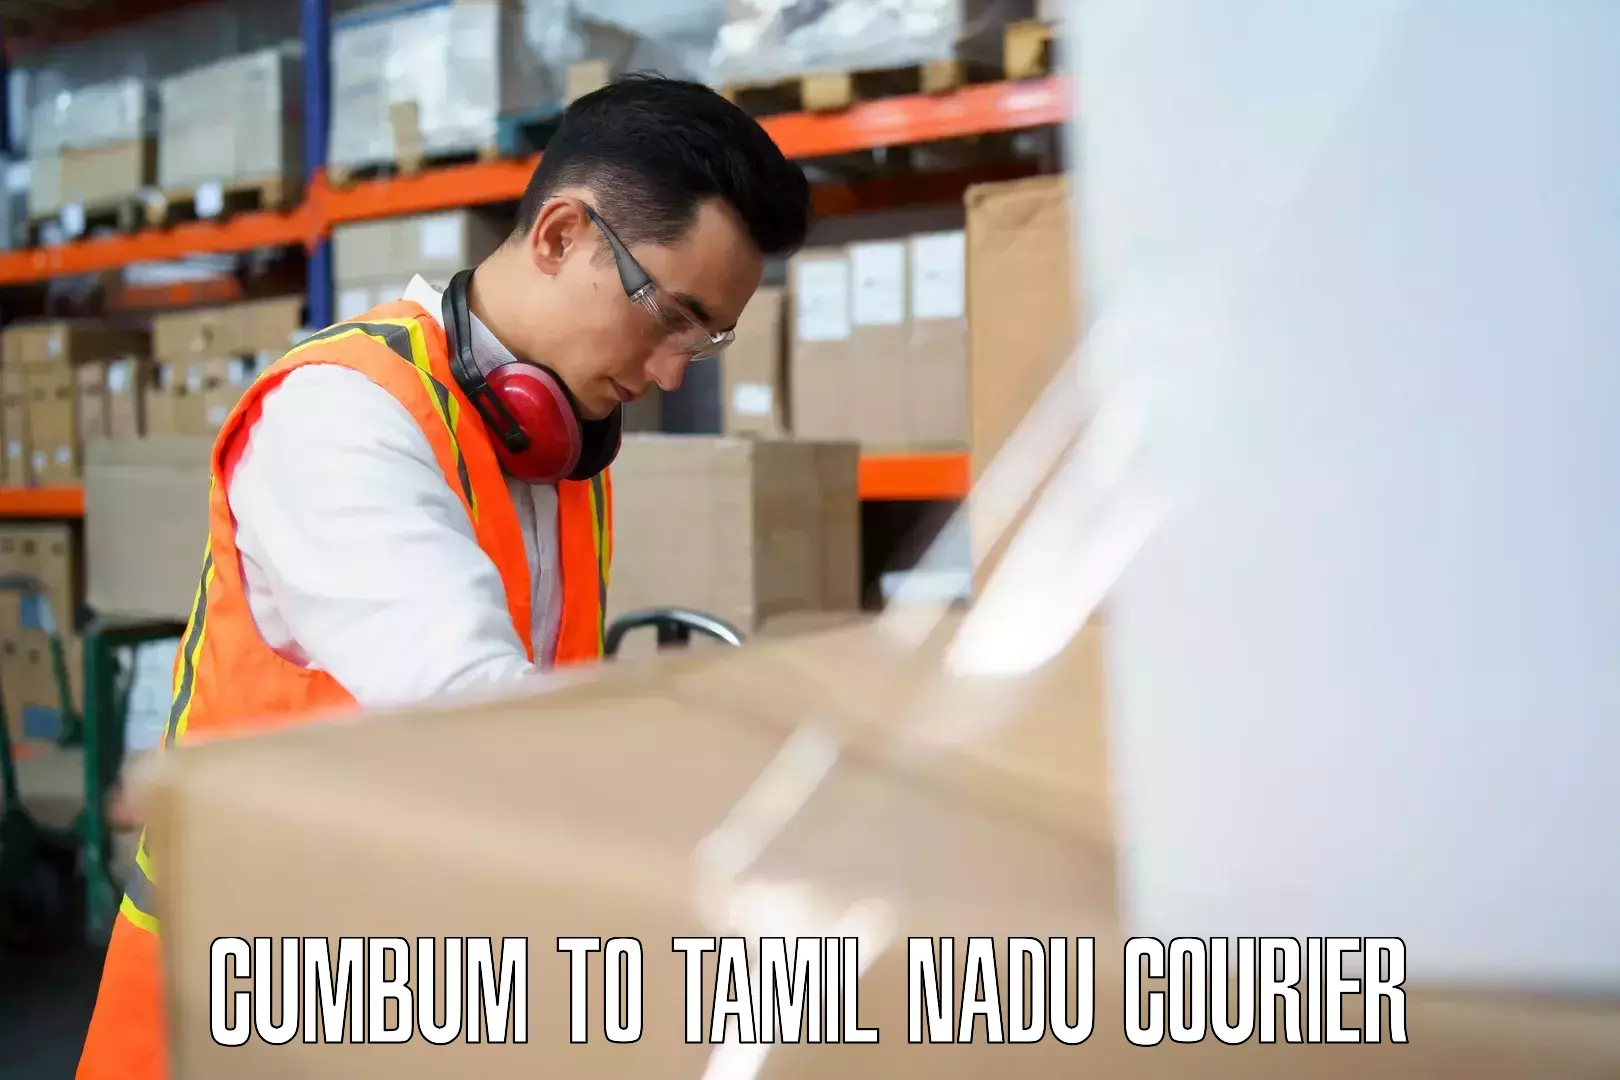 Baggage shipping experts Cumbum to Tamil Nadu